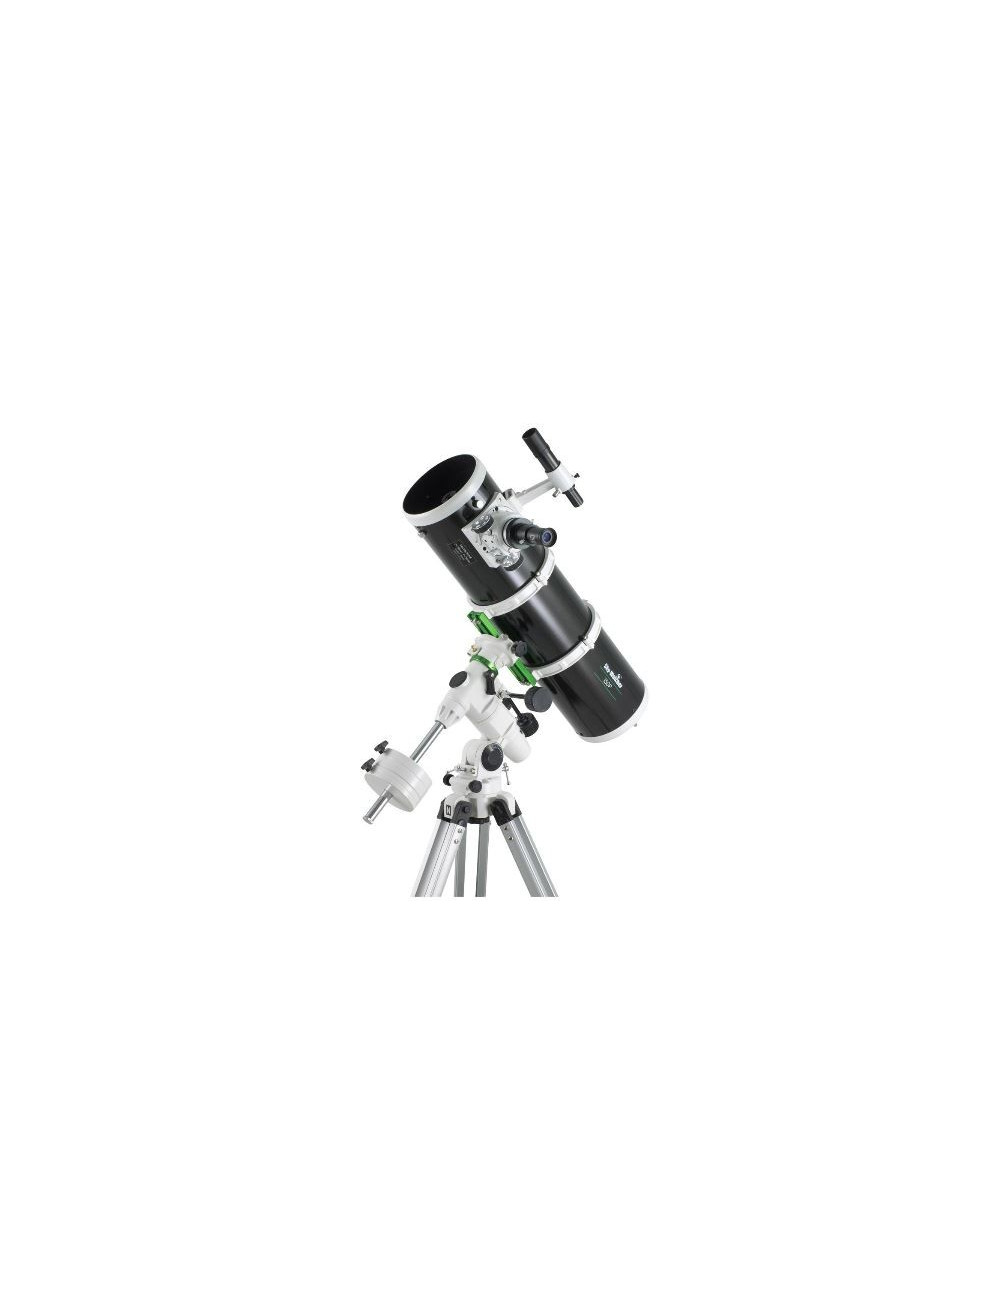 Telescope Sky-Watcher 150/750 EQ3-2 Black Diamond